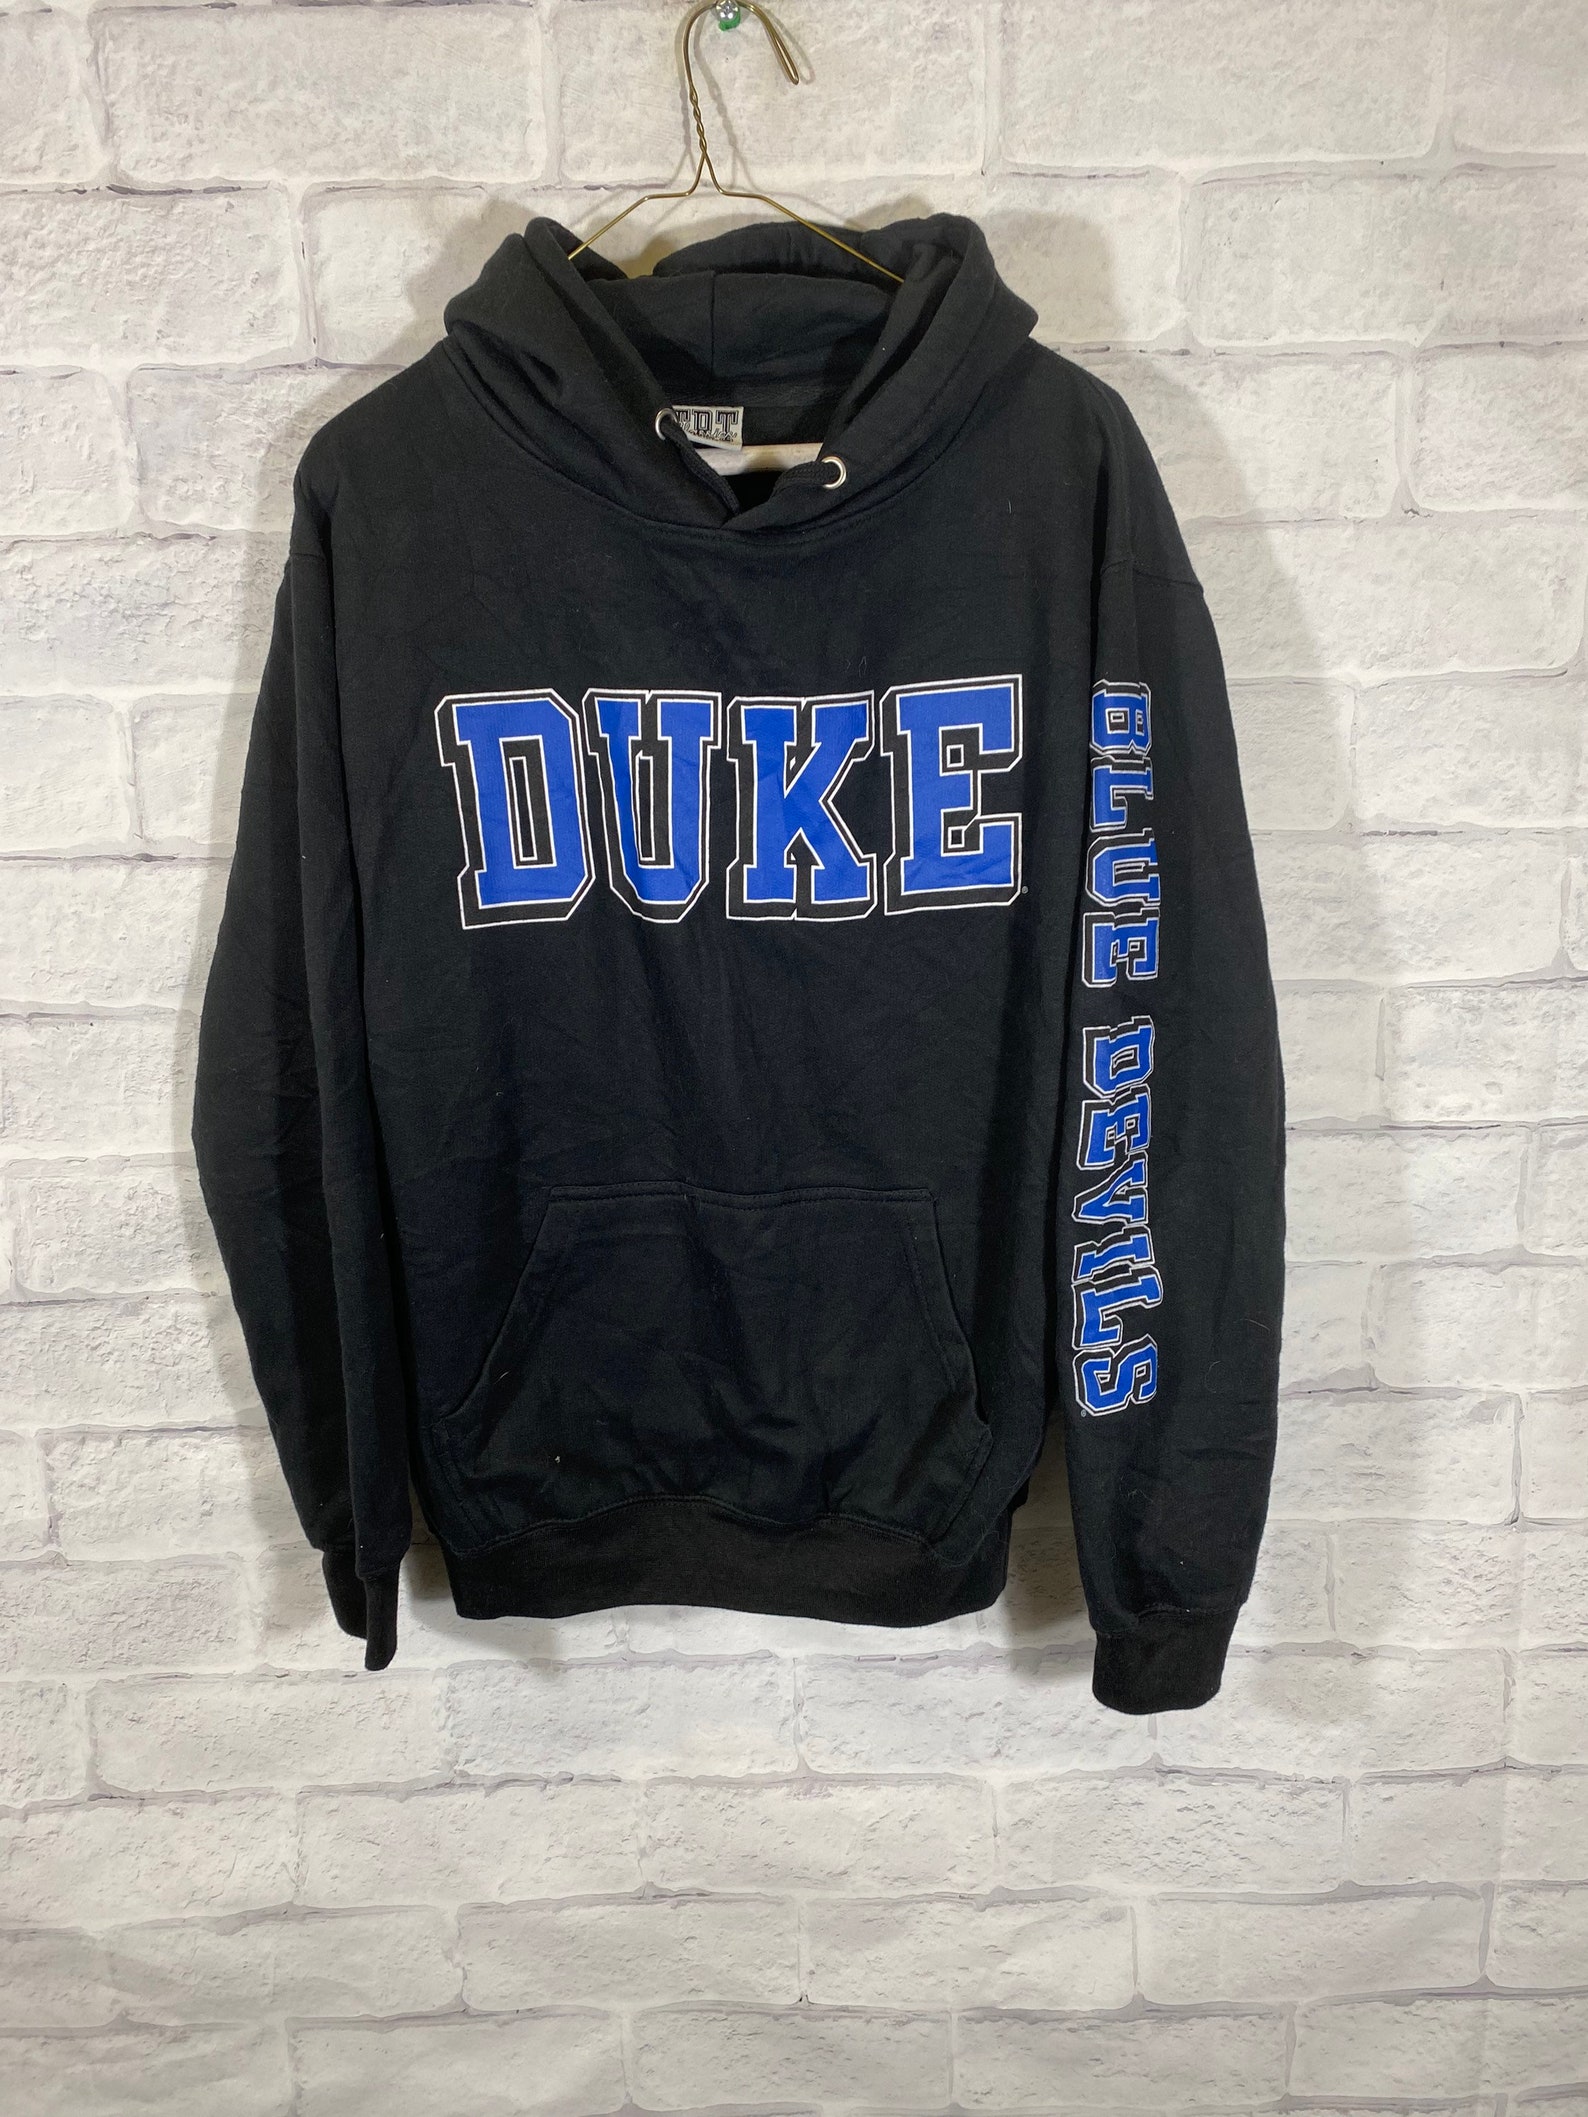 Duke University NCAA spellout arm hoodie sweater | Etsy